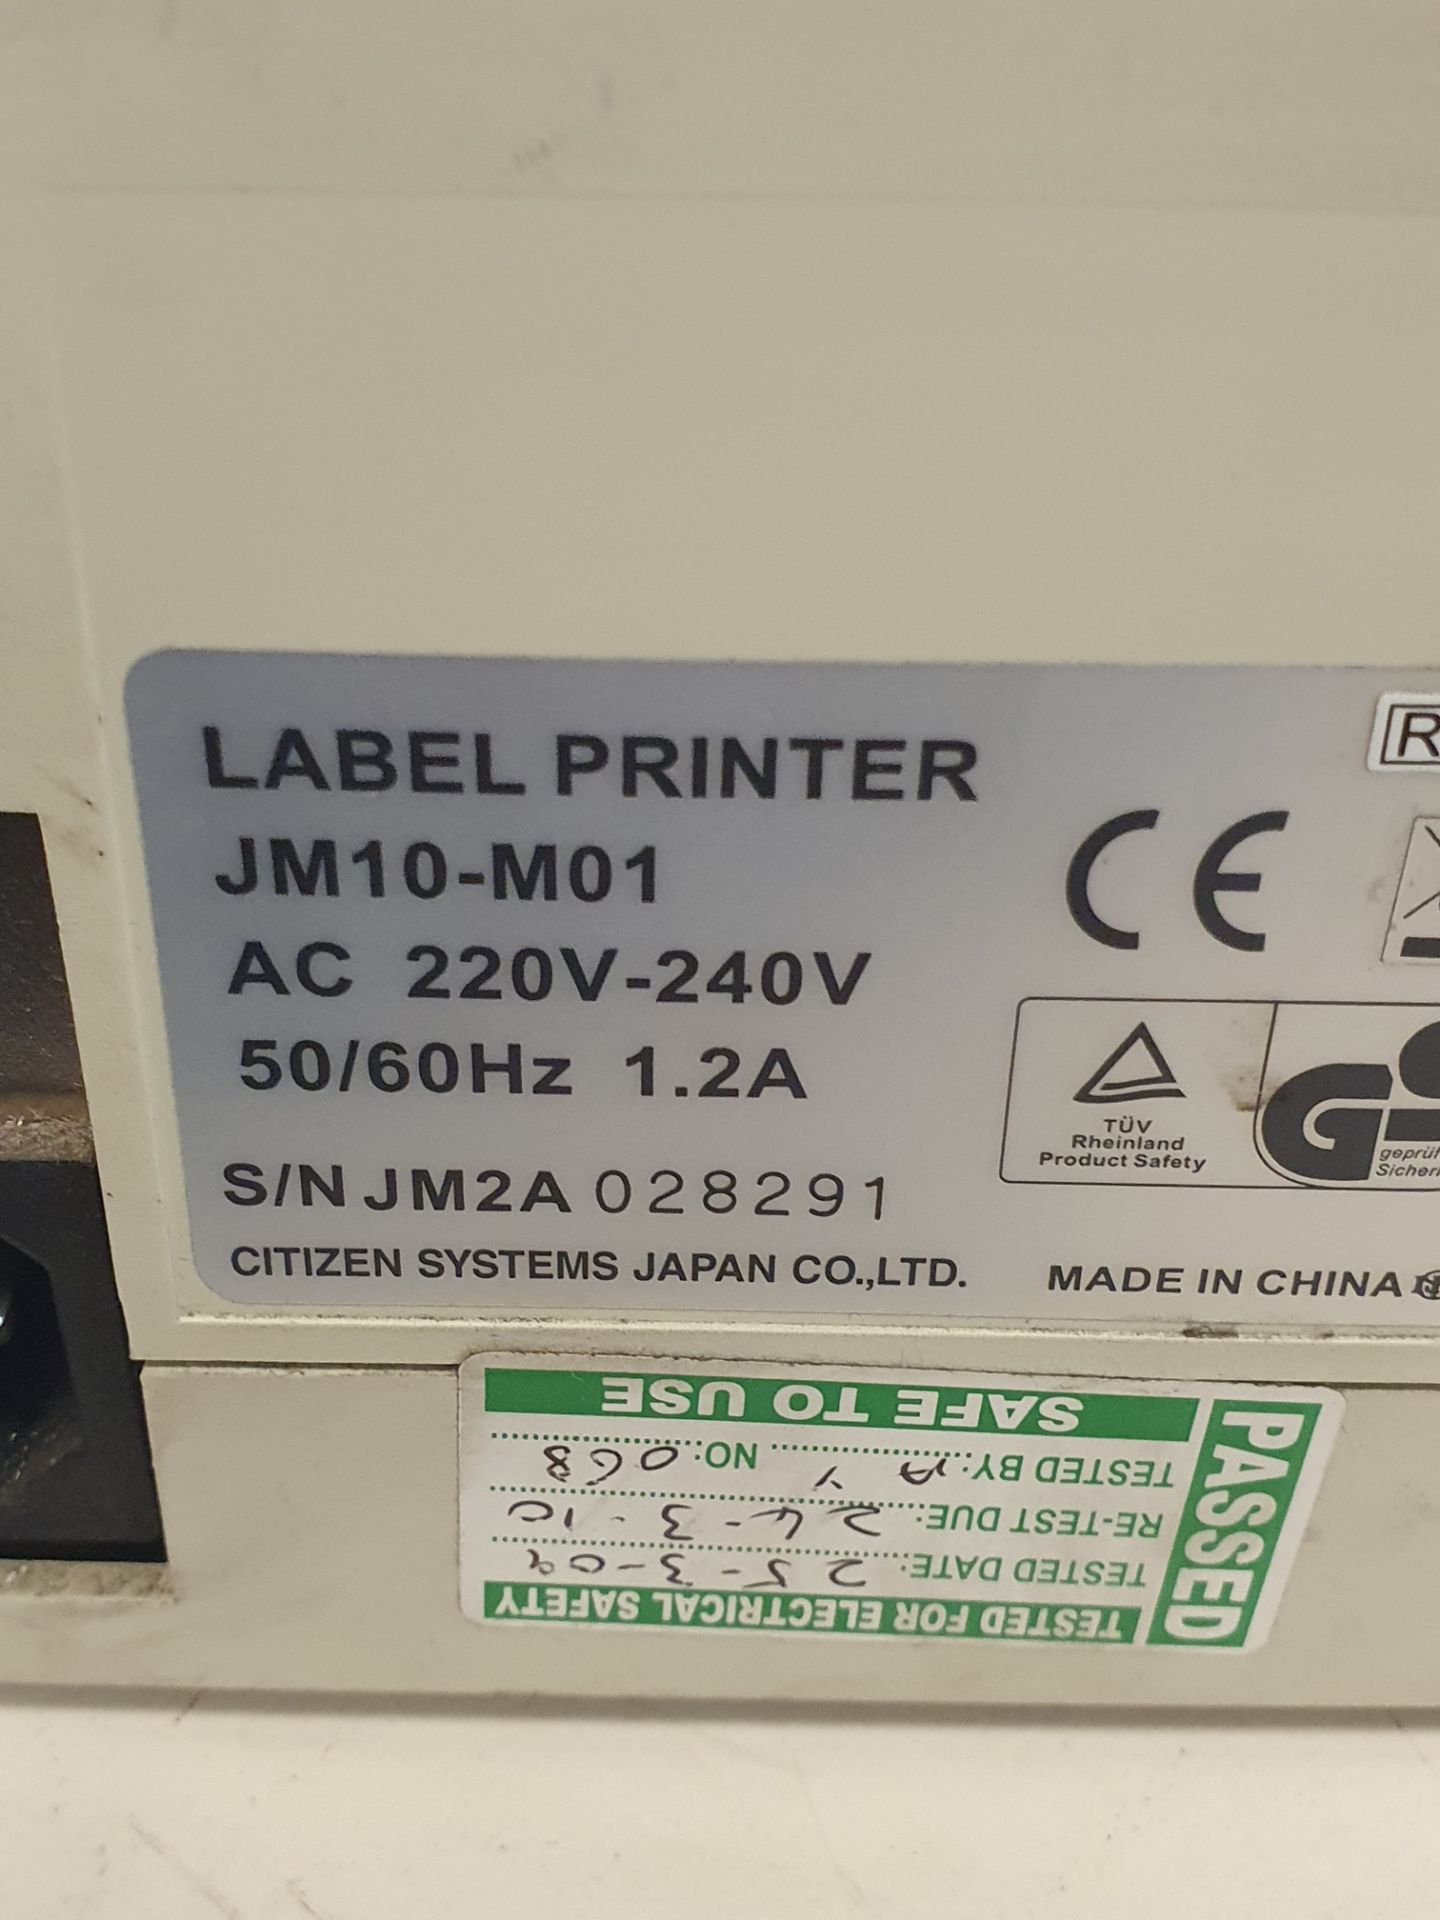 Citizen CLP-521 label printer - Image 3 of 3